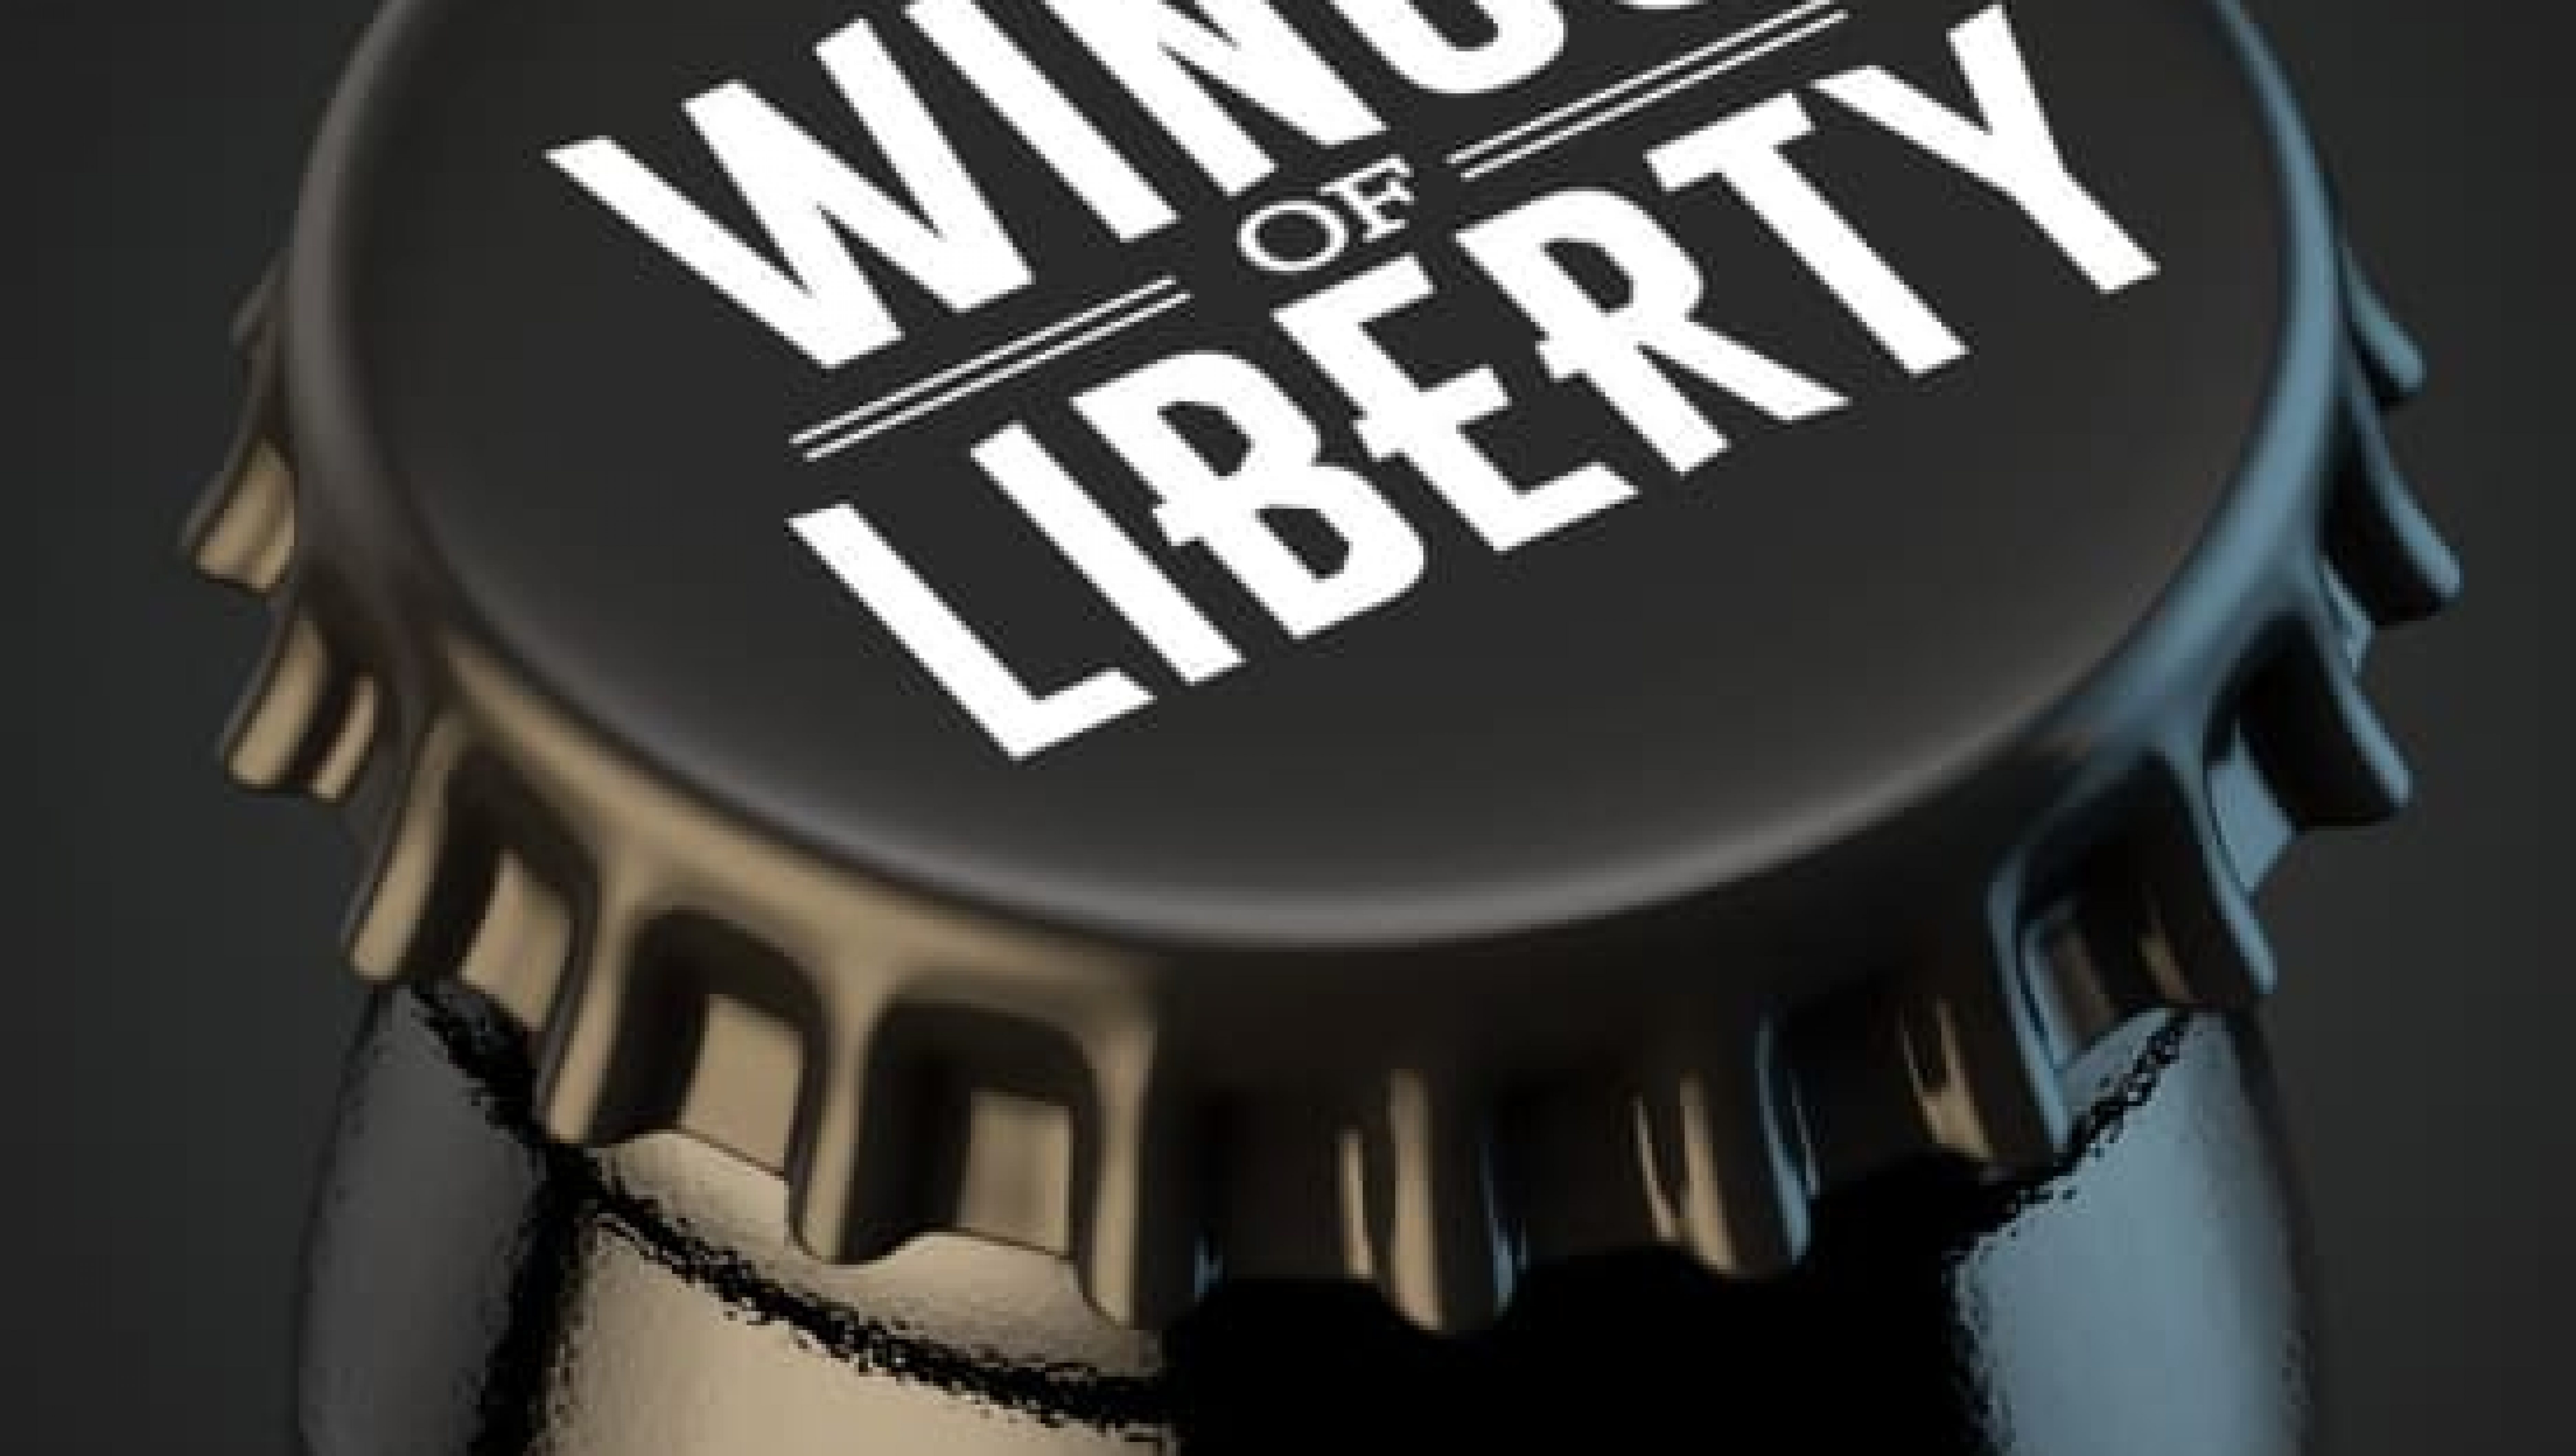 Wings of Liberty